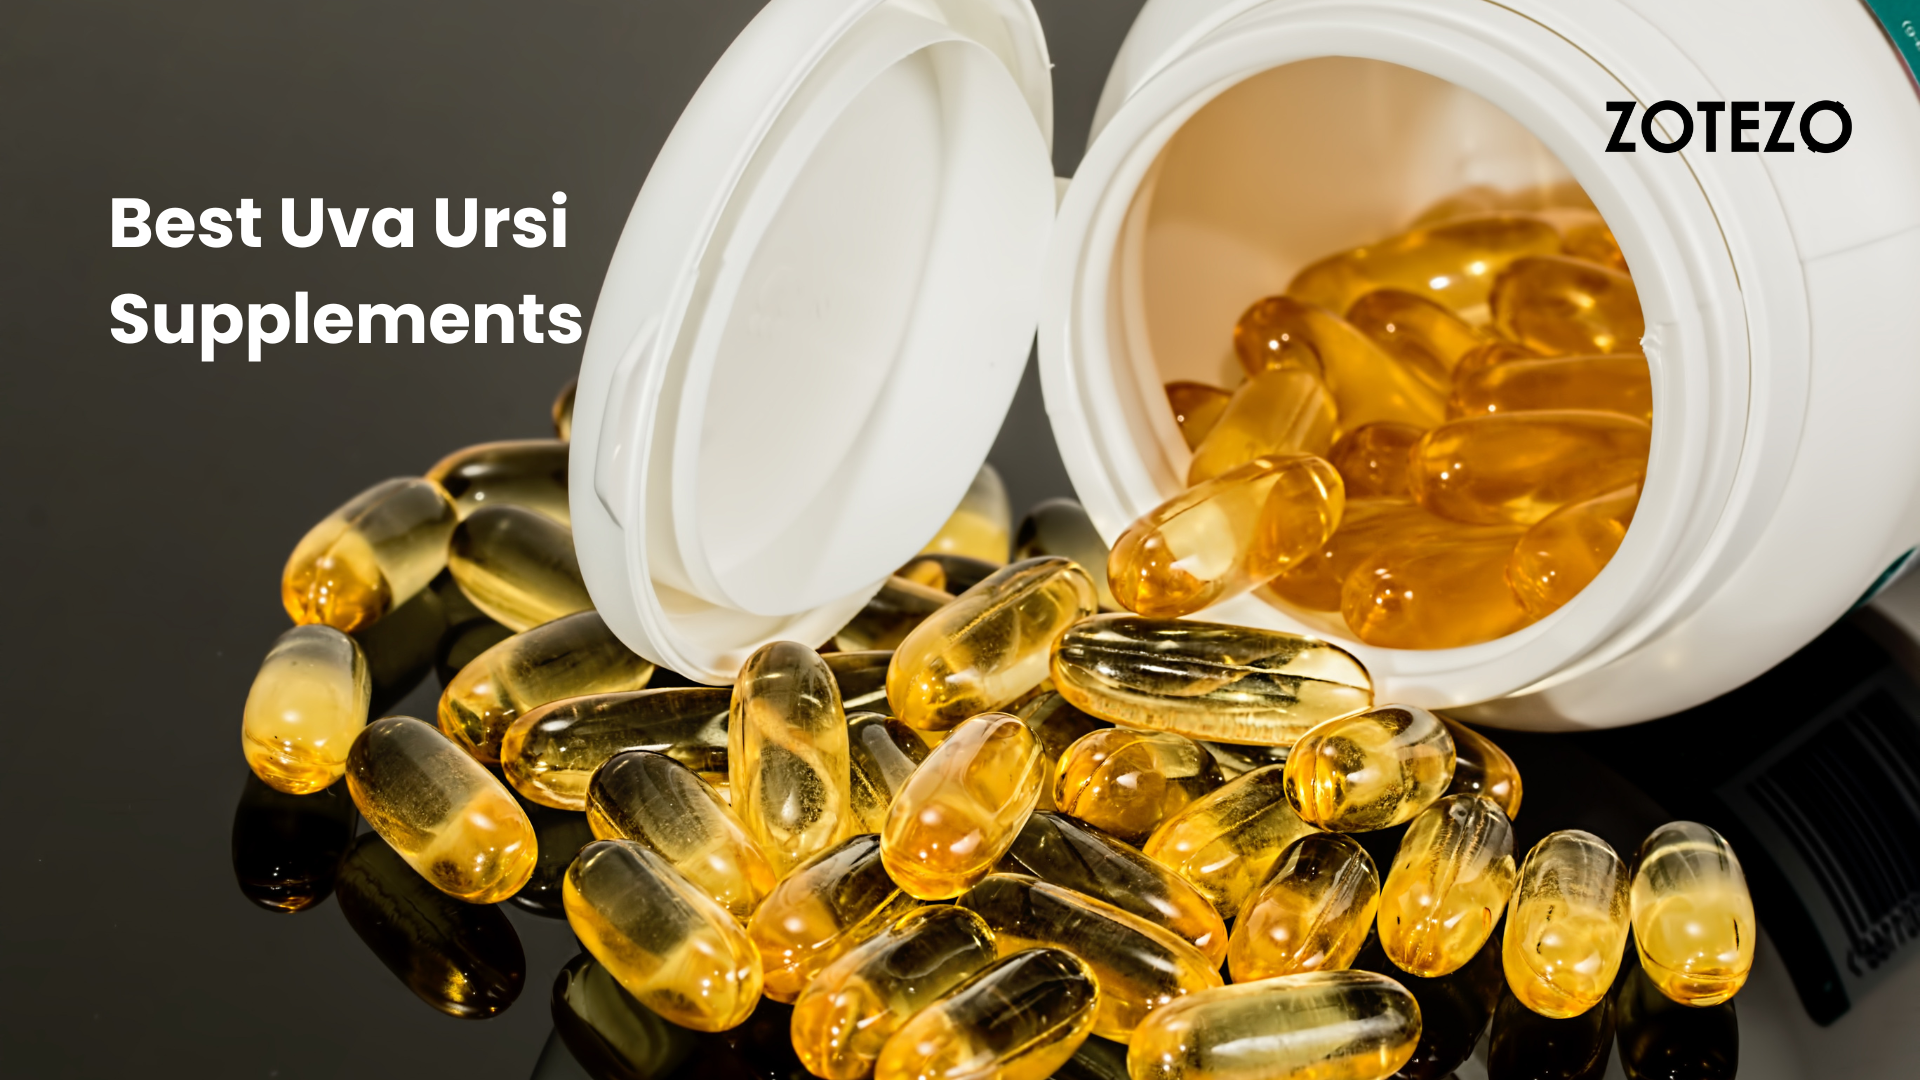 Uva Ursi Supplements in Italy